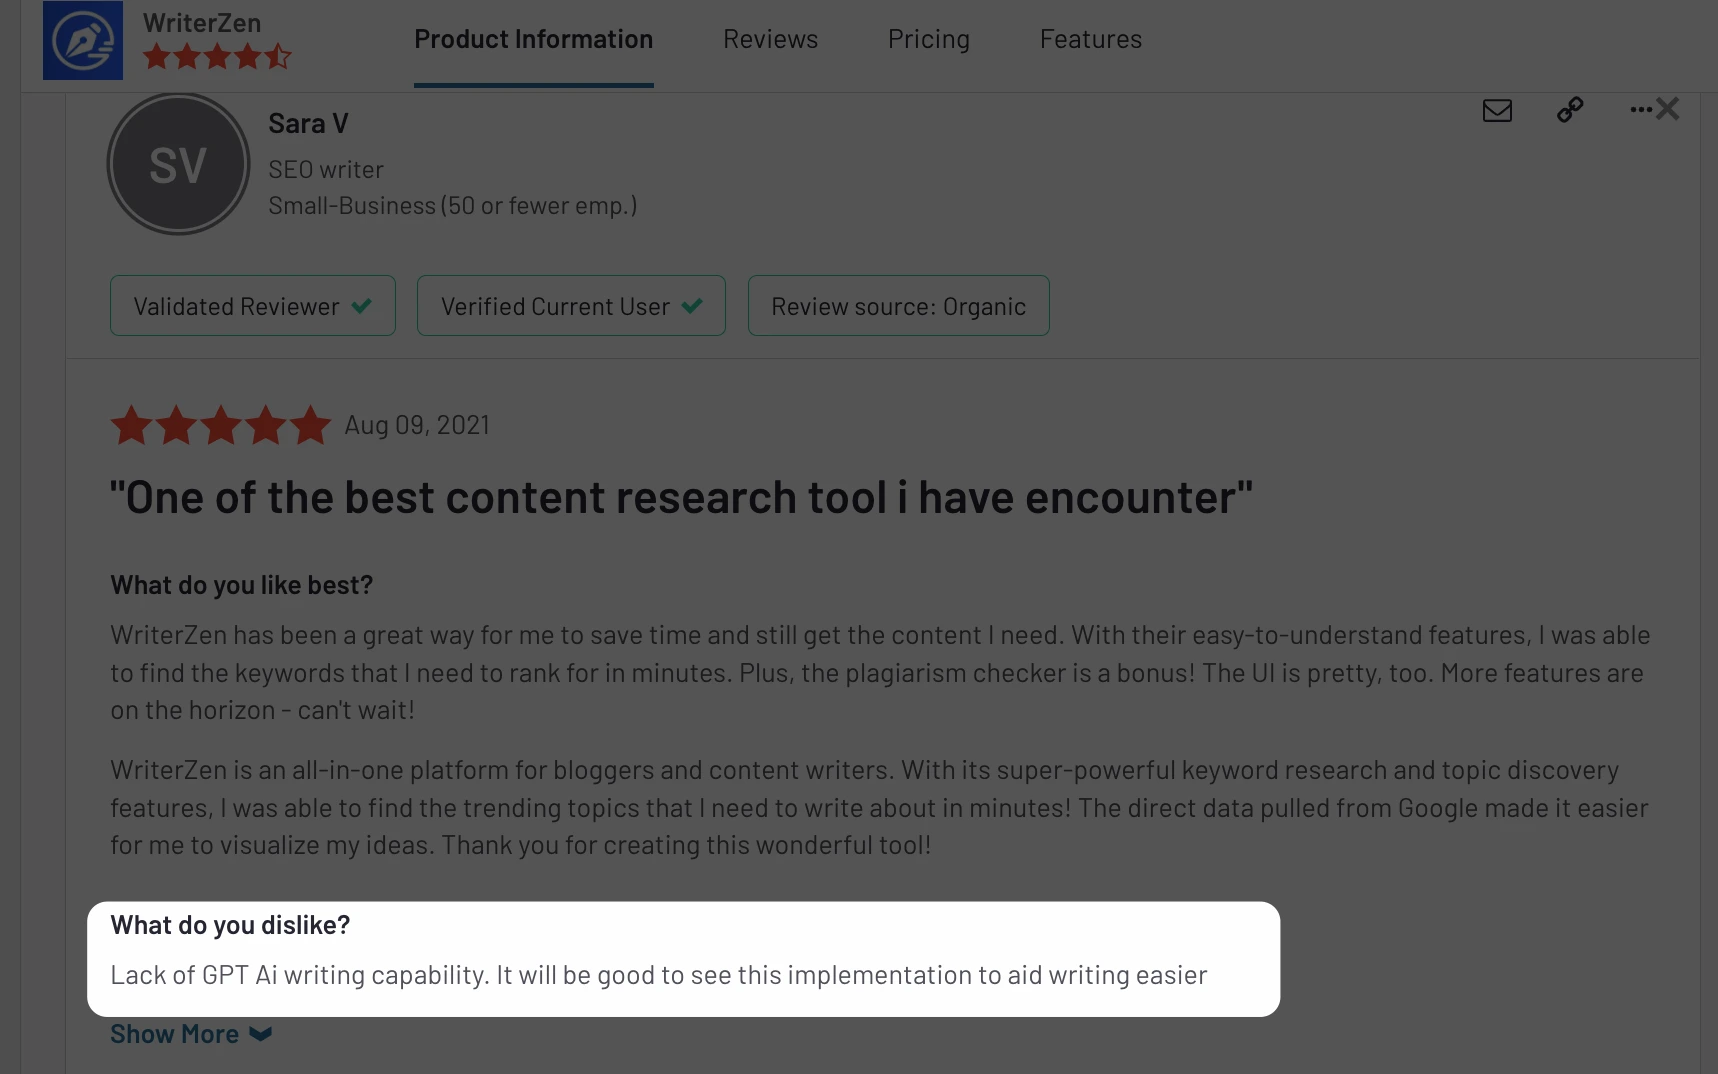 Customer requests an AI feature on WriterZen